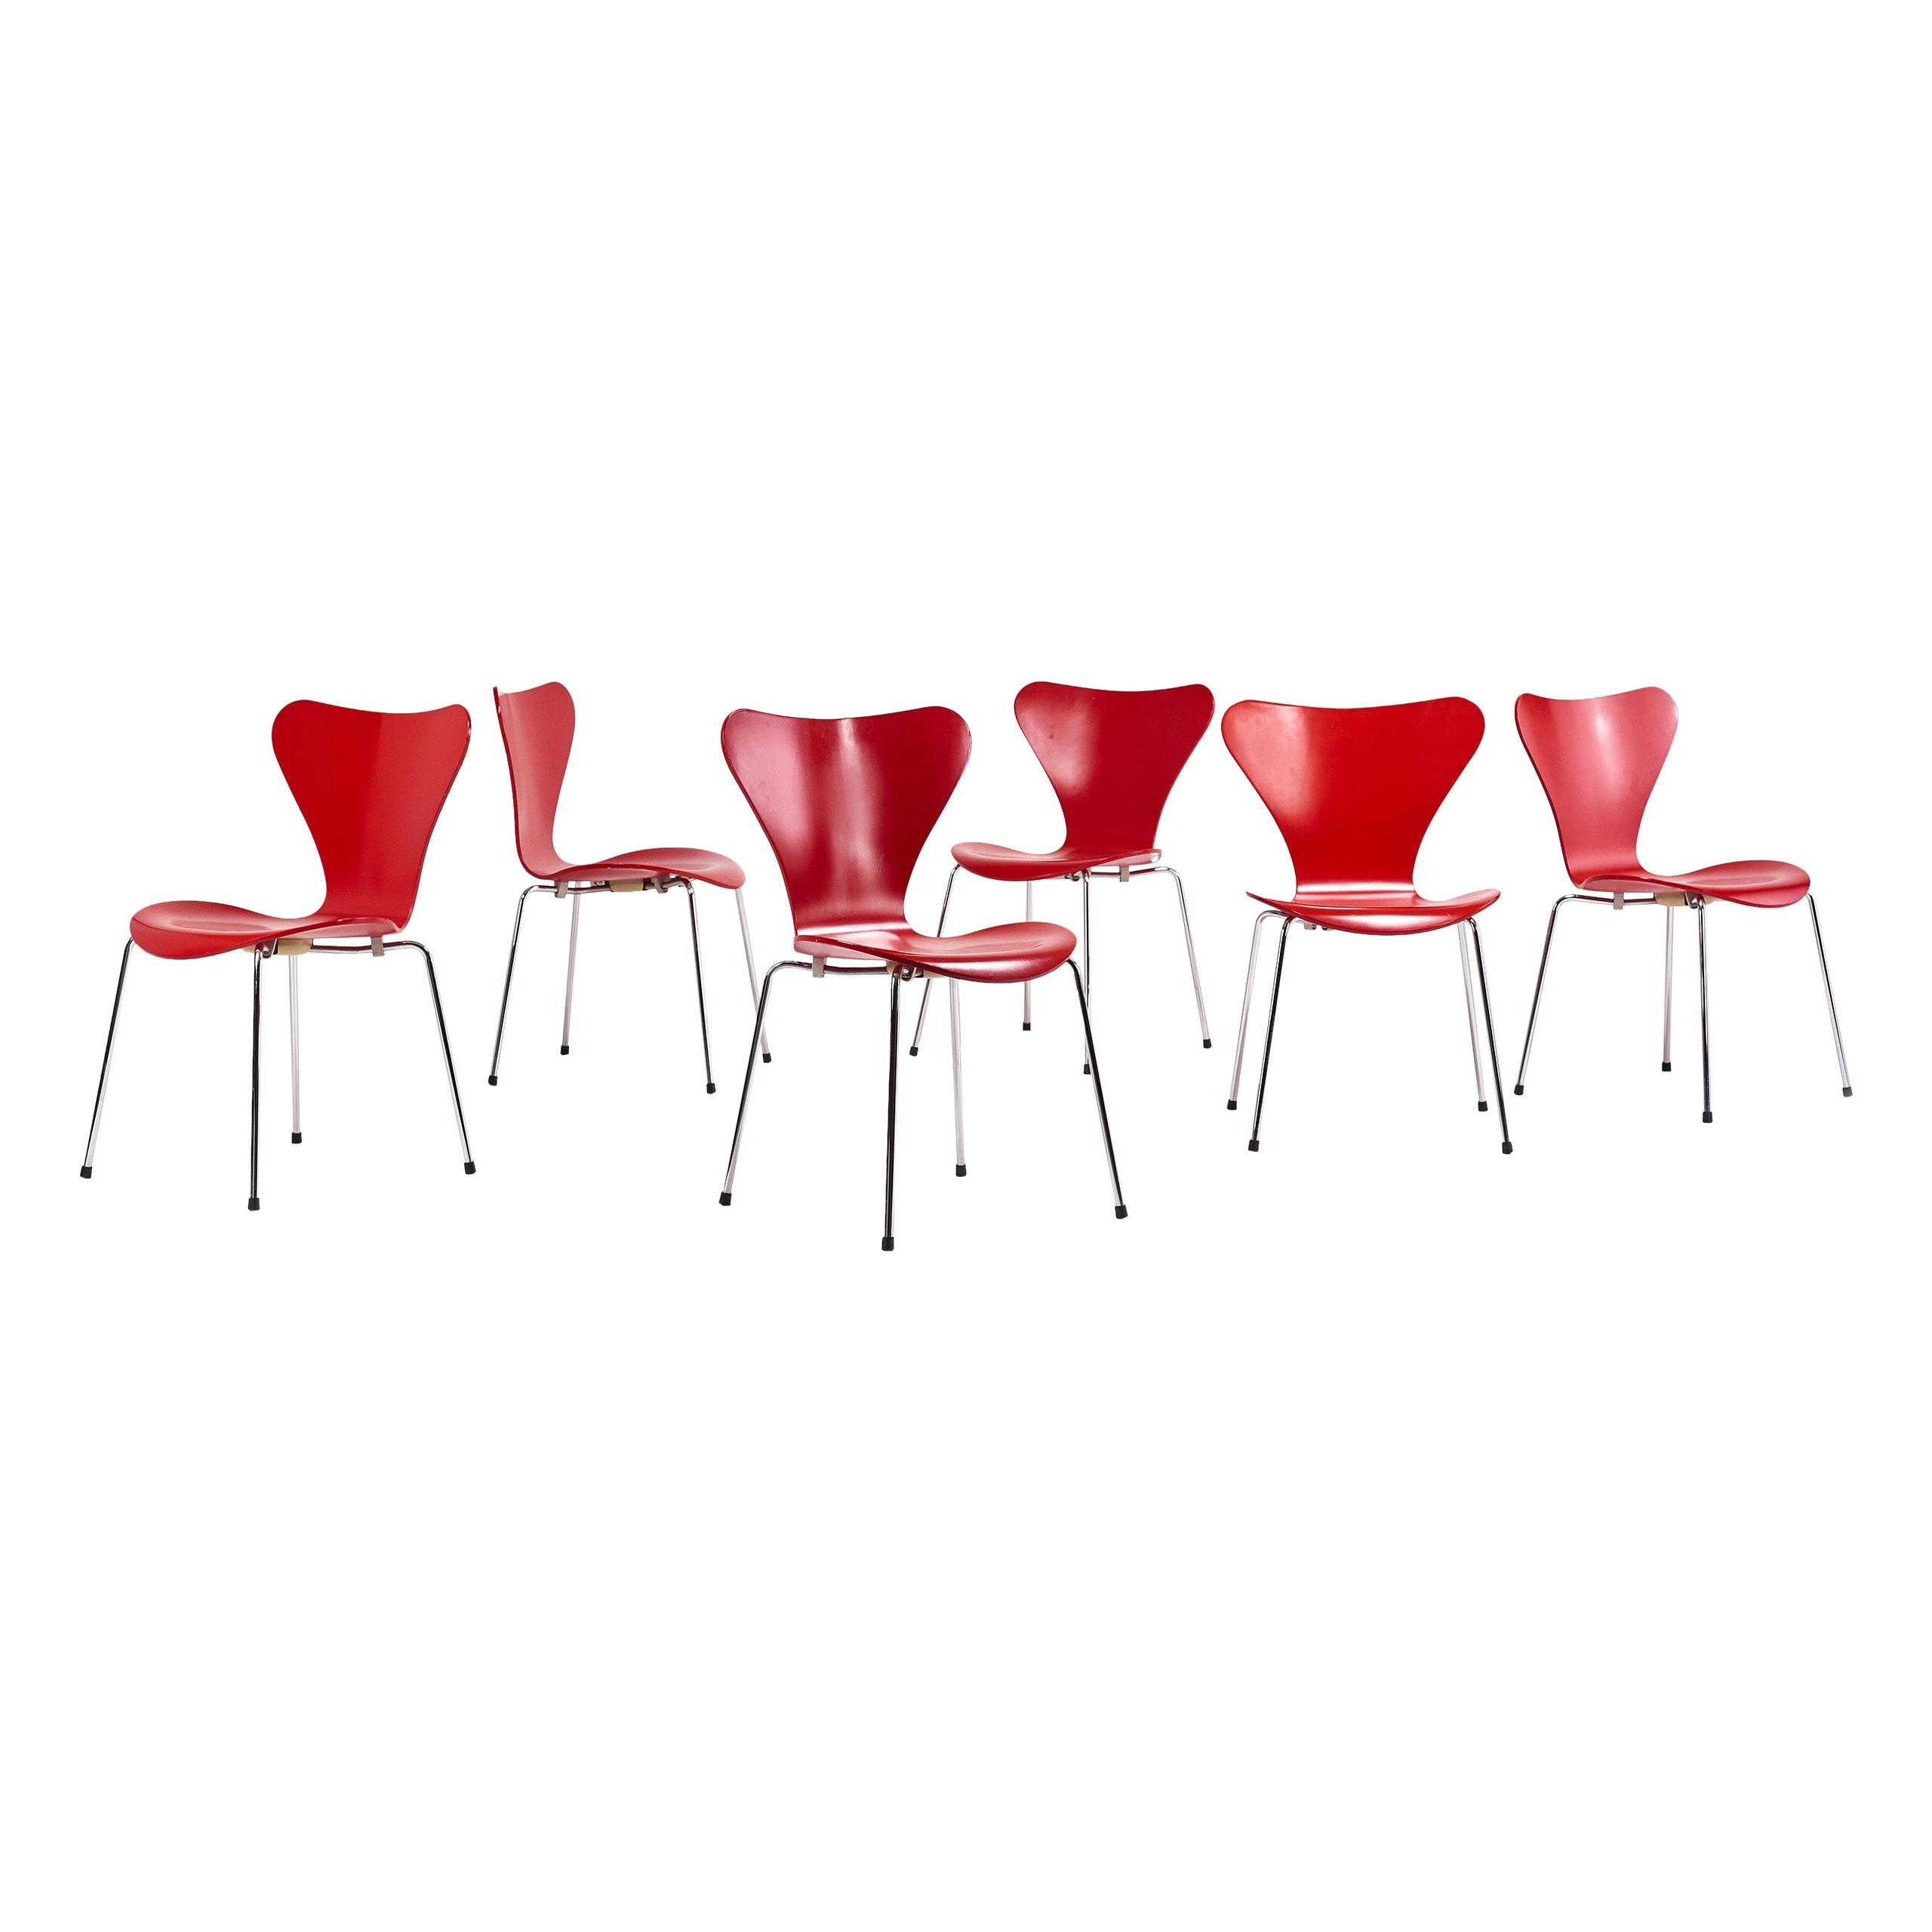 Arne Jacobsen for Fritz Hansen, 3107 "Butterfly" Chairs, Set of 6